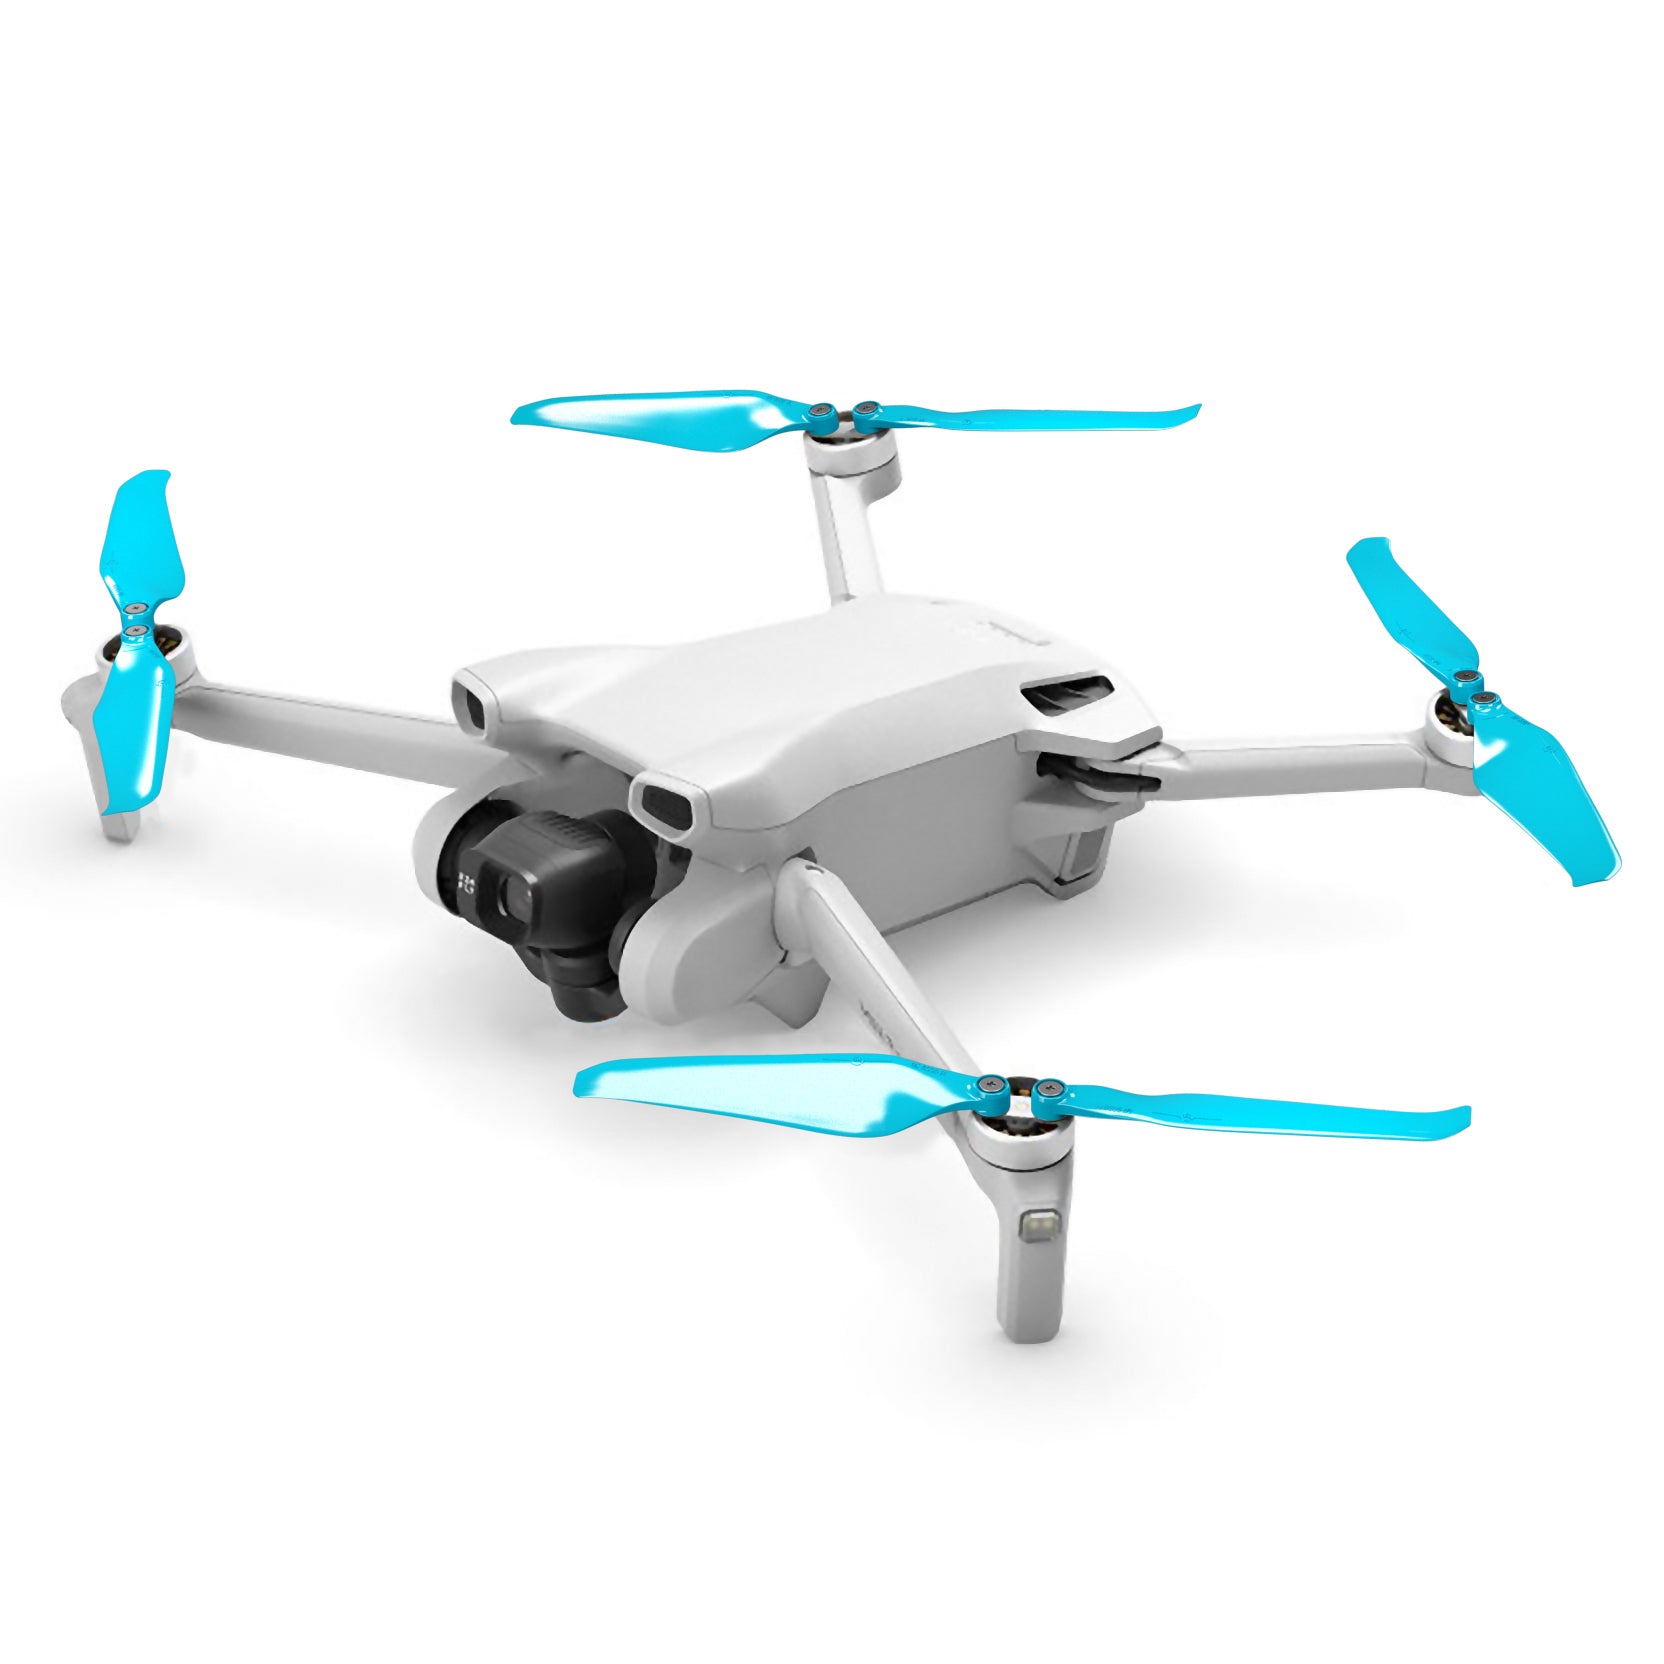  DJI Mini 3 Pro (DJI RC), Mini Drone with 4K Video, 48MP Photo,  34 Mins Flight Time, Less than 249 g, Obstacle Sensing, Return to Home, FAA  Remote ID Compliant, Drone